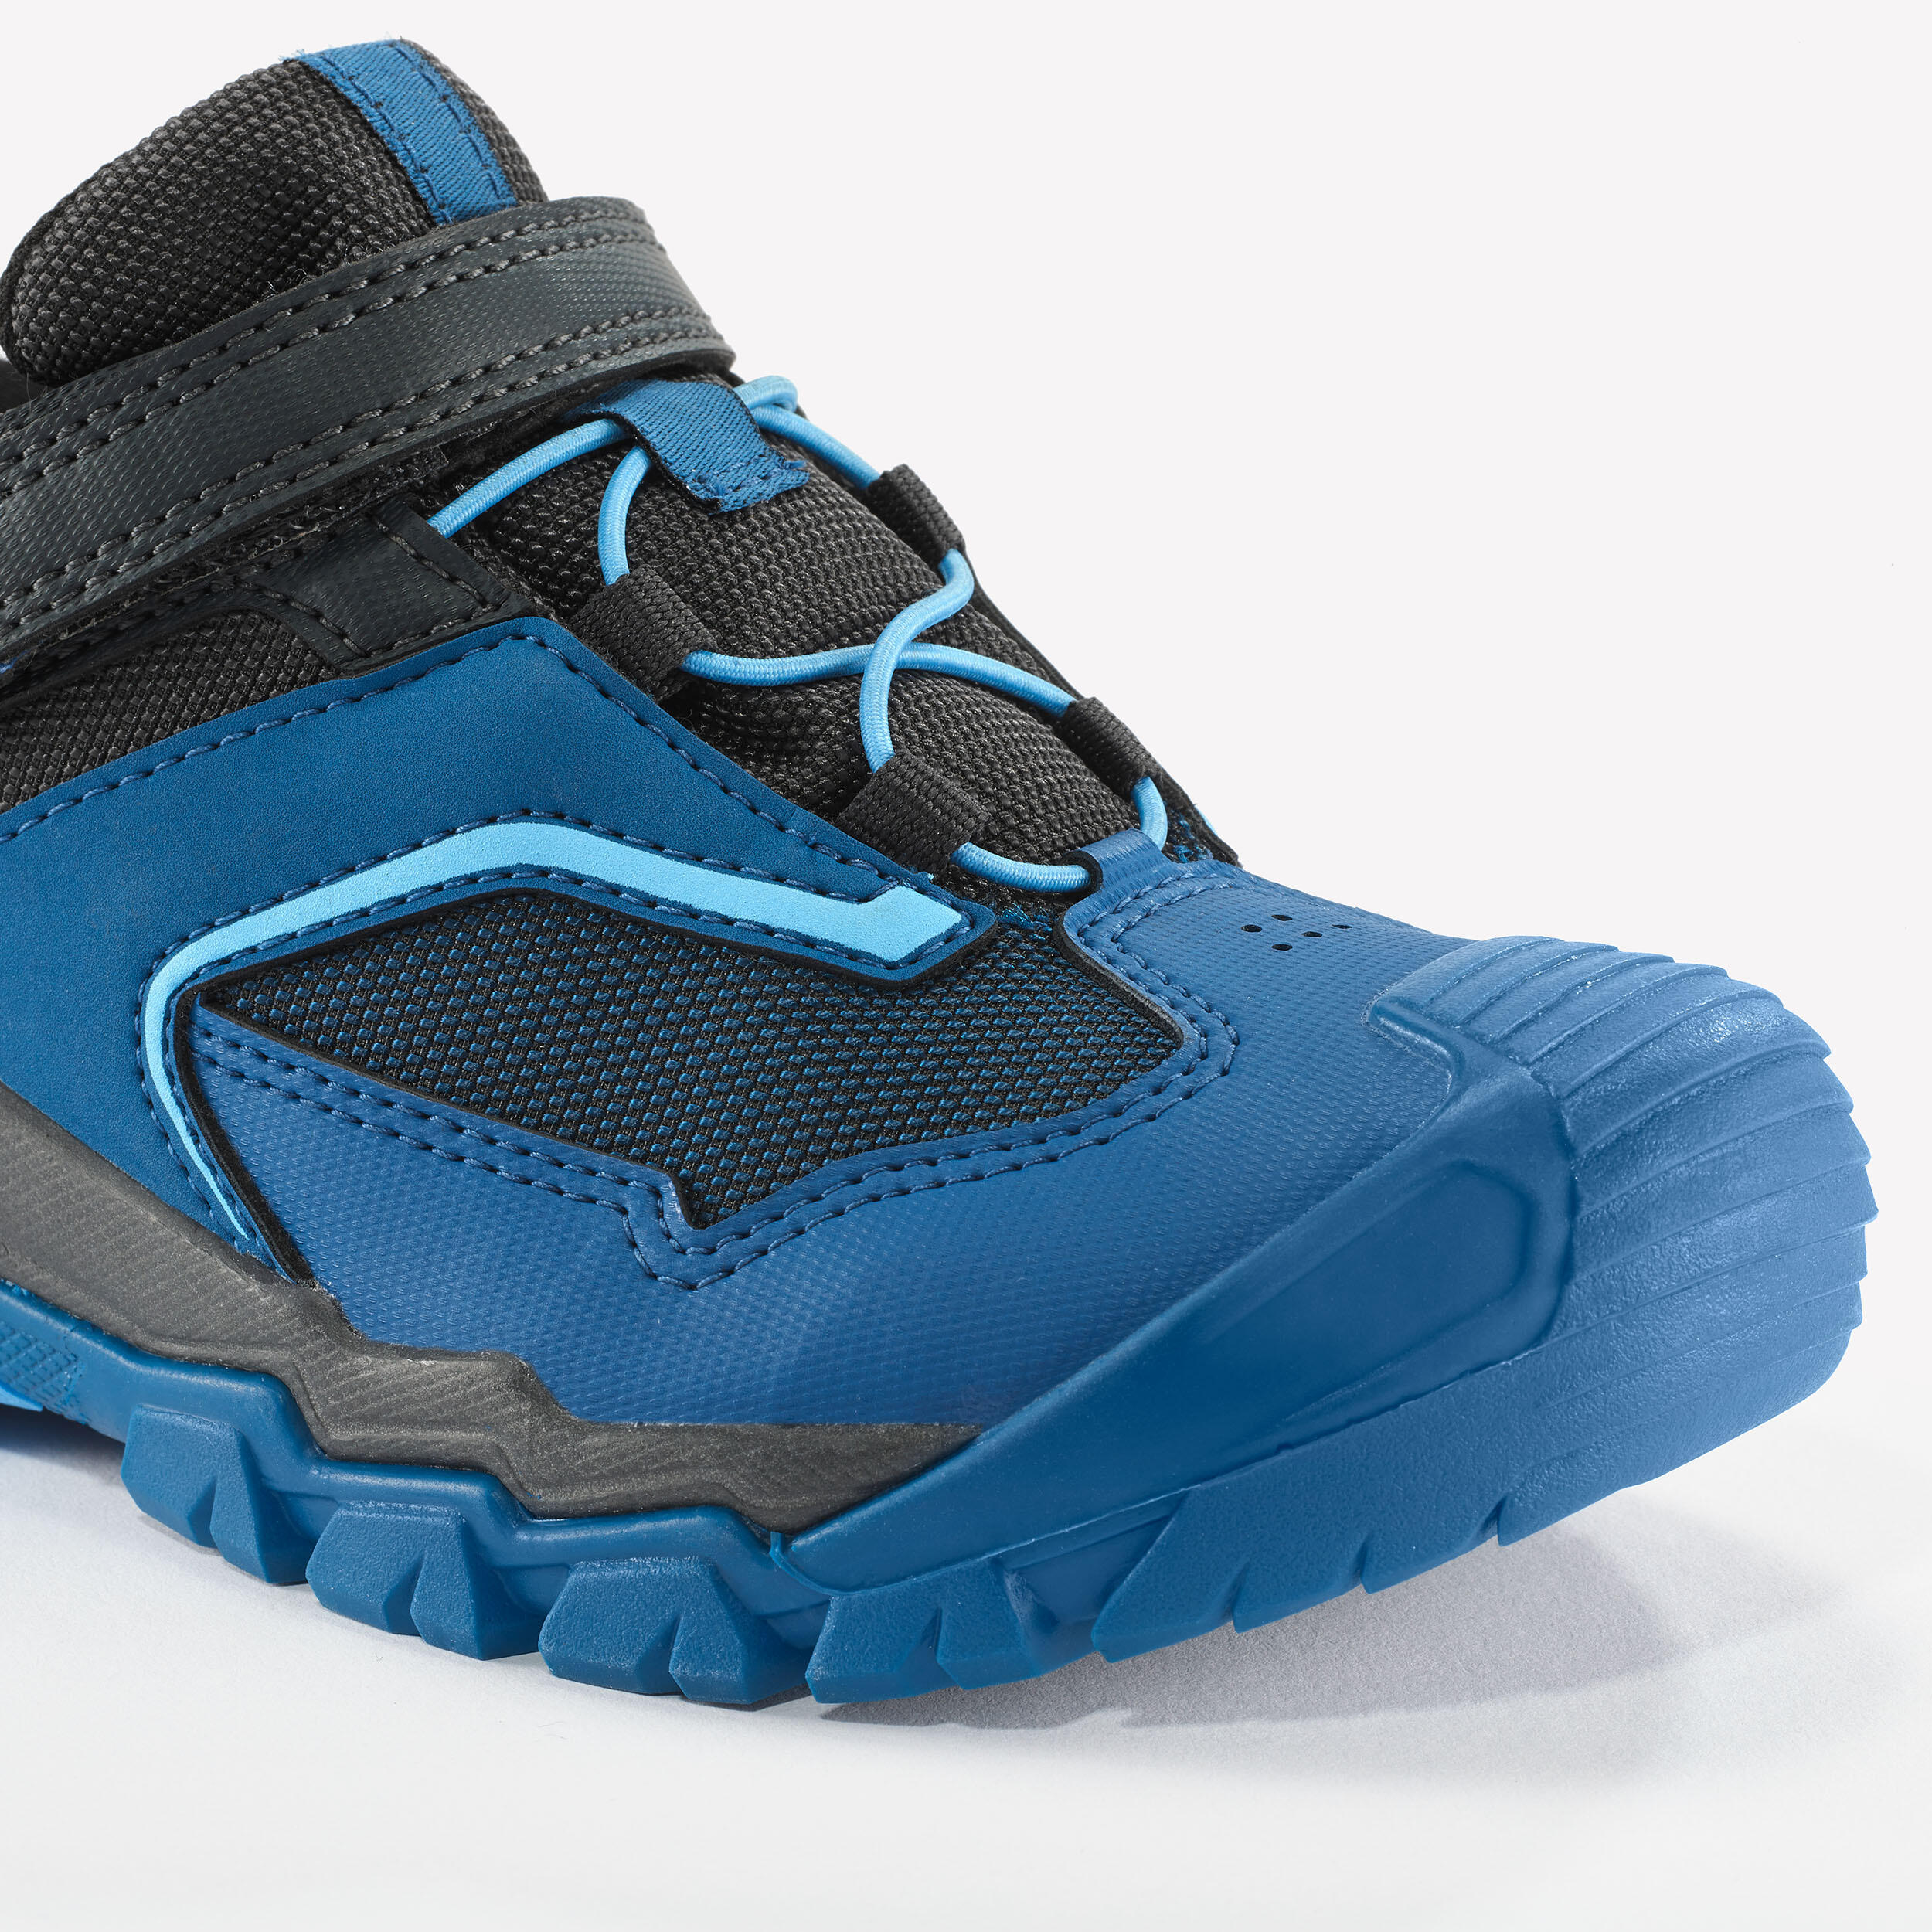 Children's Waterproof Hook and Loop Hiking Boots - CROSSROCK blue - 28–34 9/10